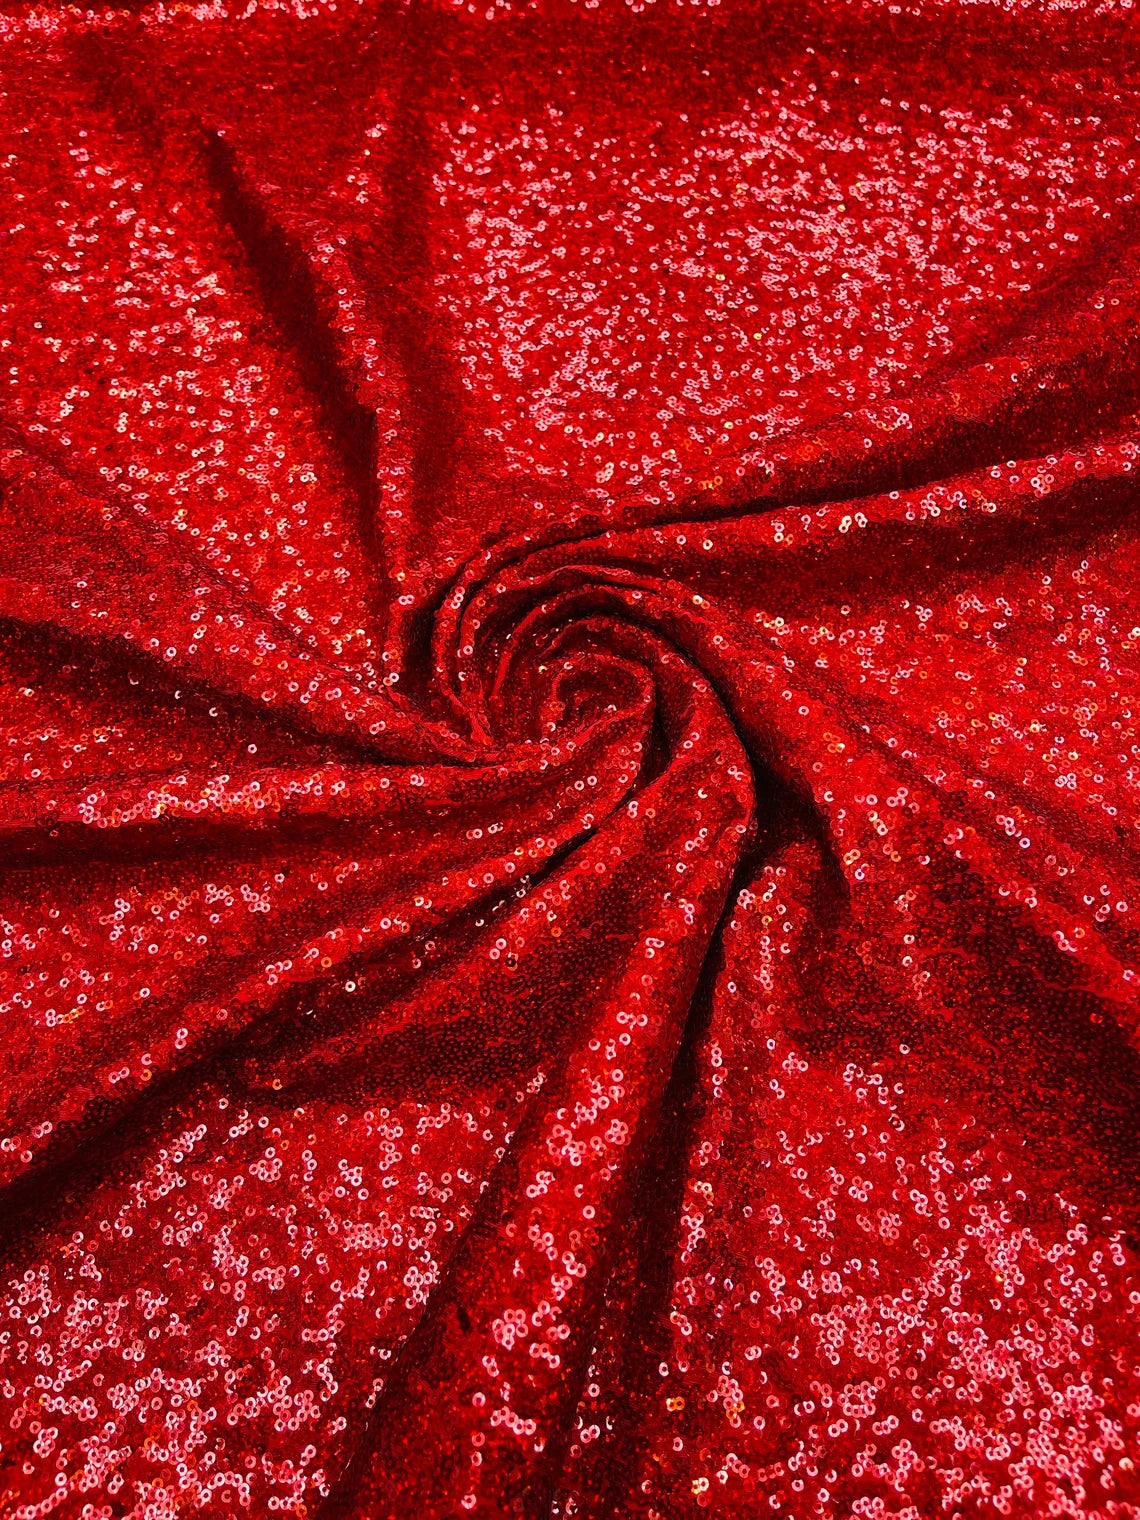 Mini Glitz Sequins on Milliskin - Red - 4 Way Stretch Milliskin Stretch Spandex Fabric by Yard